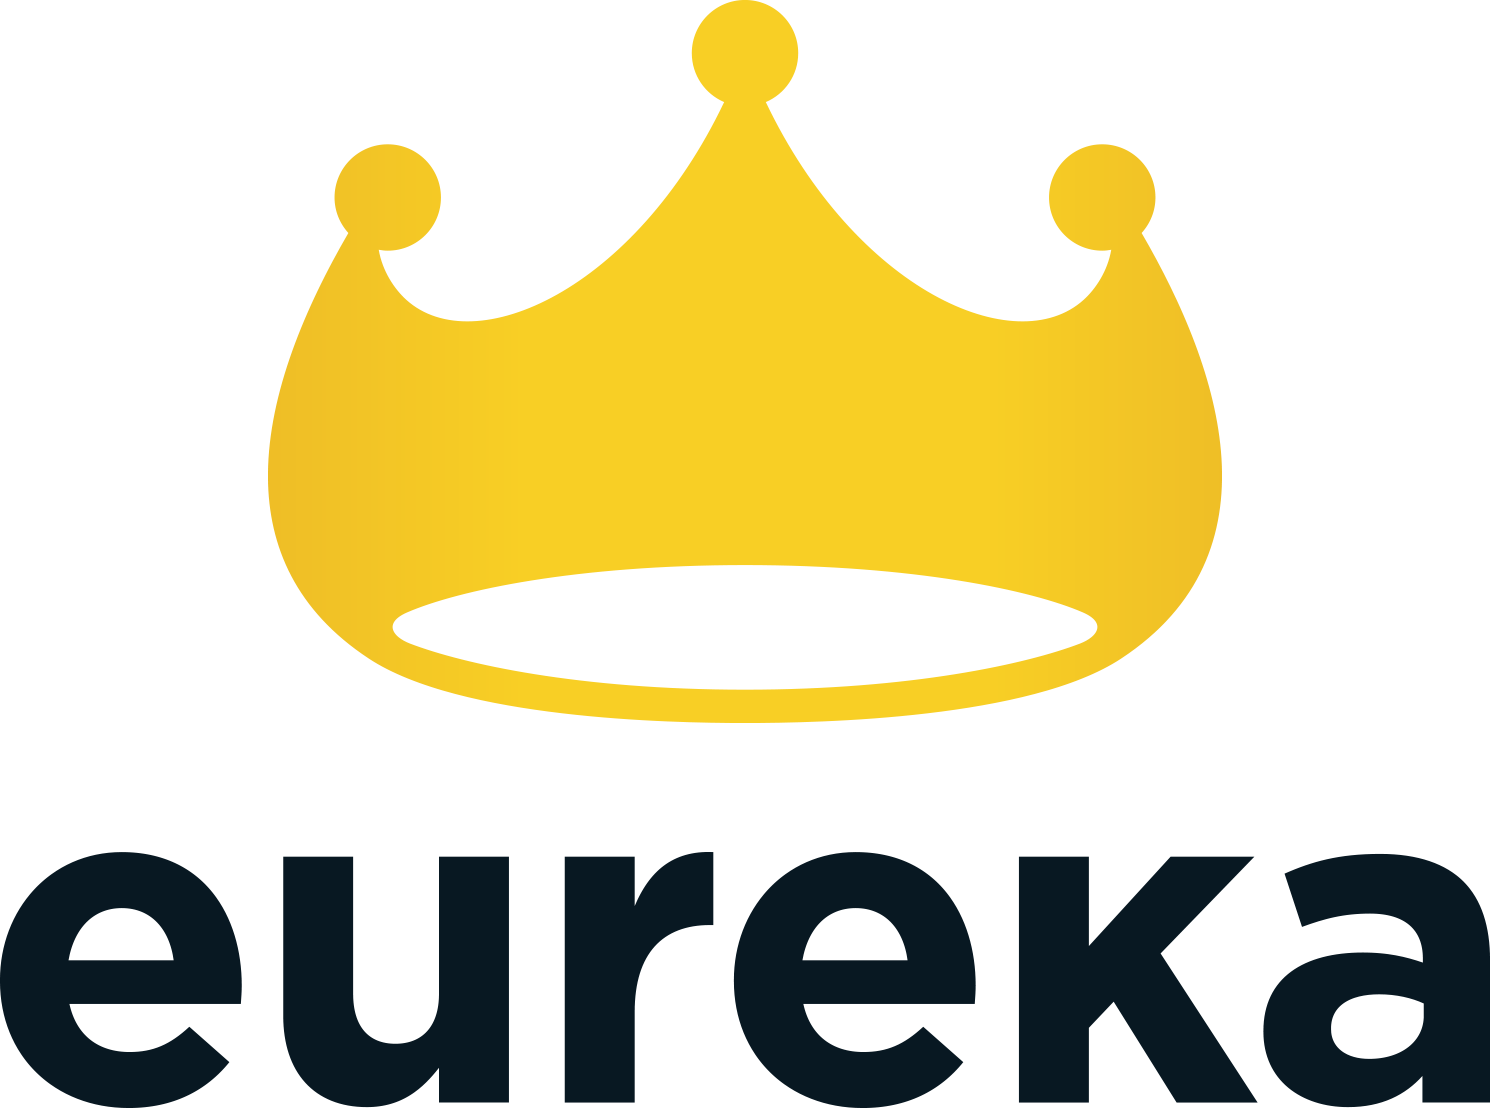 eureka.png